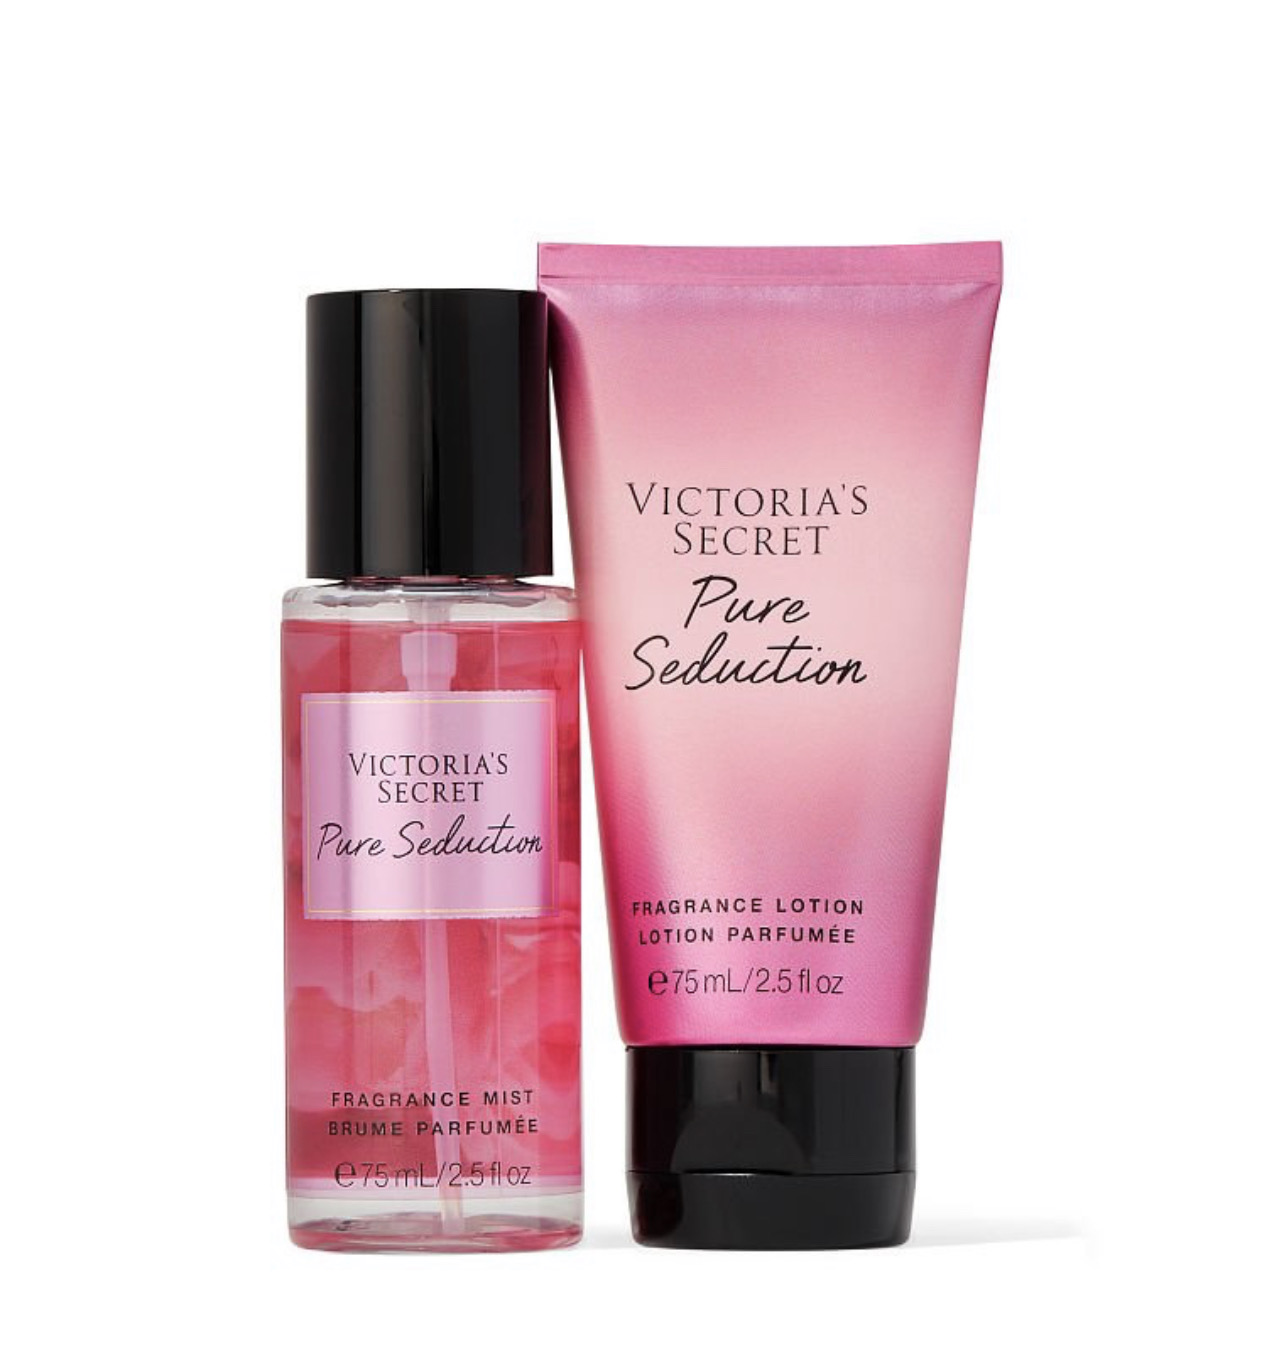 Victoria's Secret Bare Vanilla Fragrance Mist and Lotion Gift Set 2.5 Fl.  Oz New